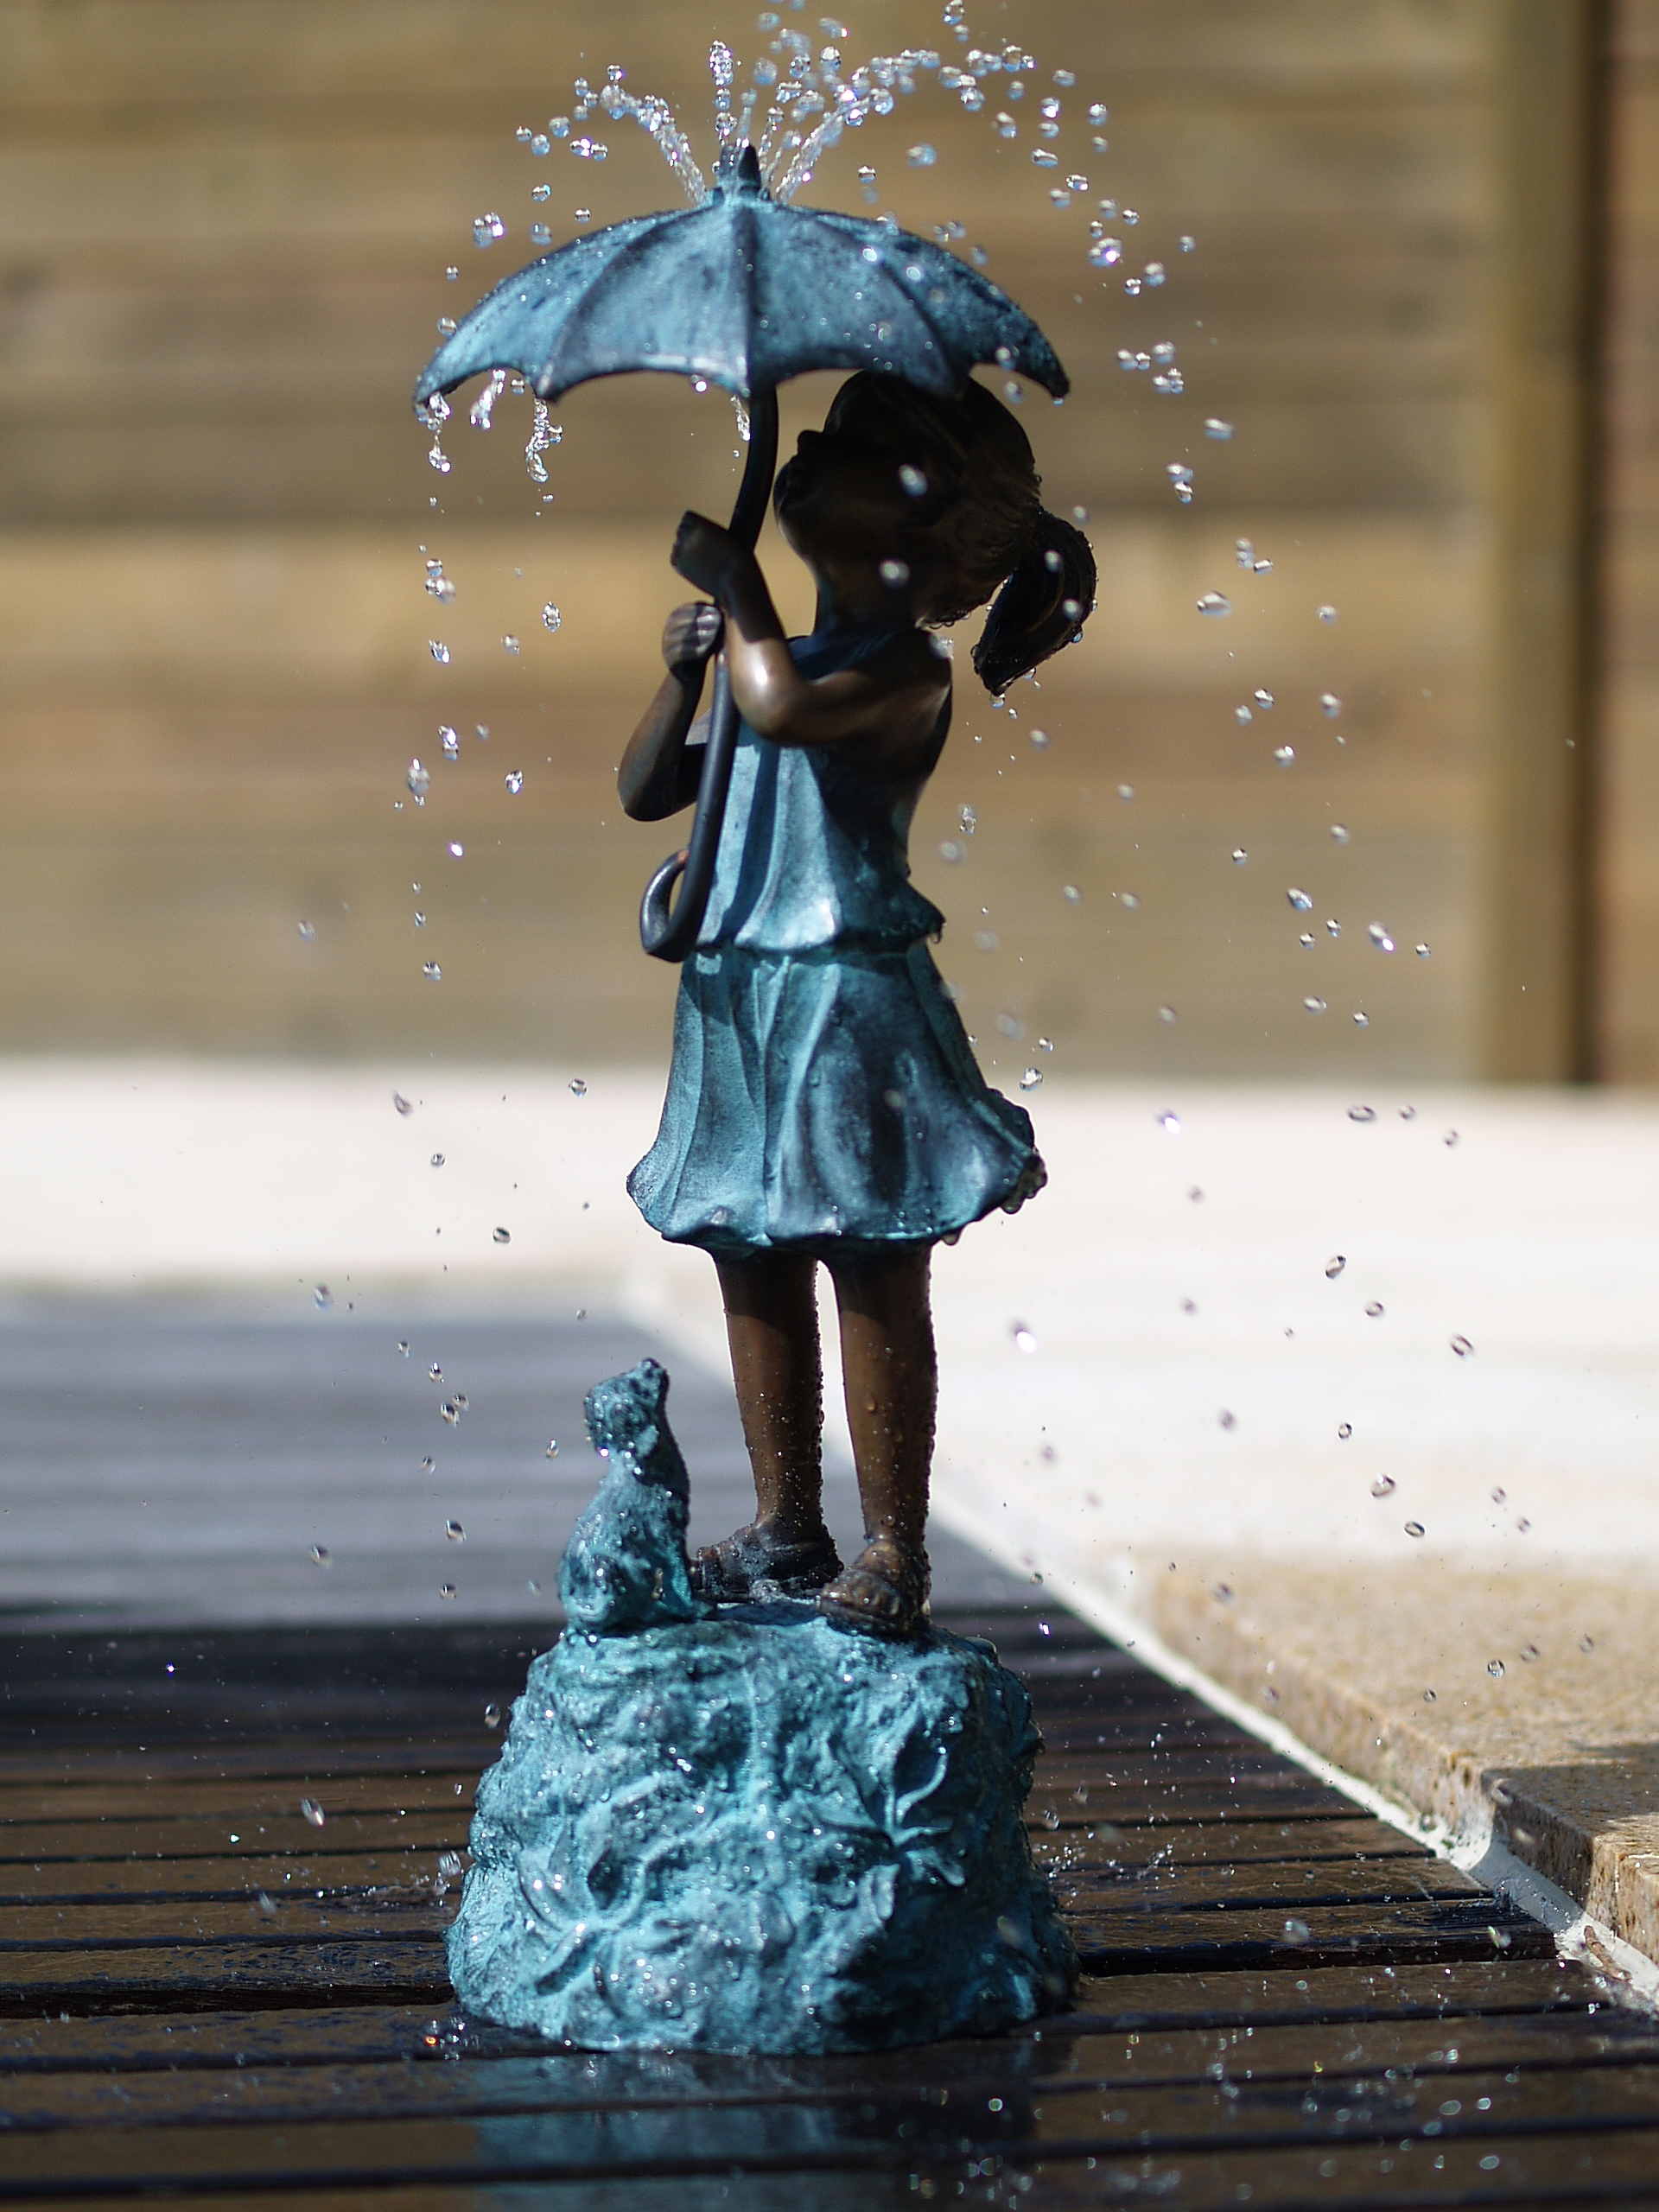 Girl Umbrella Fountain Dog Water Feature Bronze Sculpture FO 54 1 | Avant Garden Bronzes